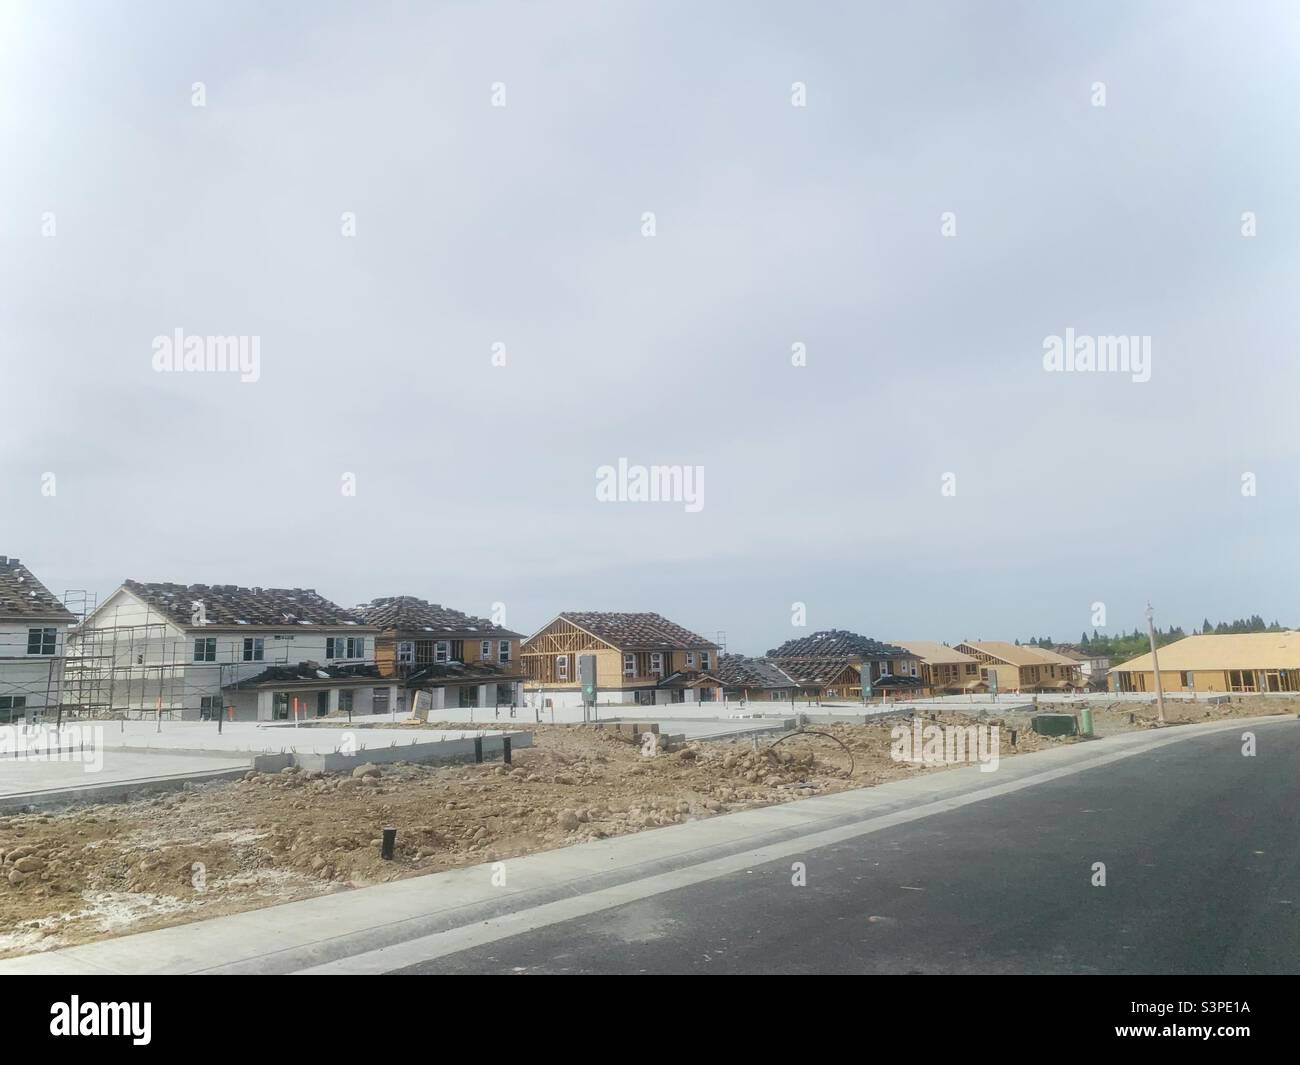 Neighborhoods in America - new homes being built Stock Photo